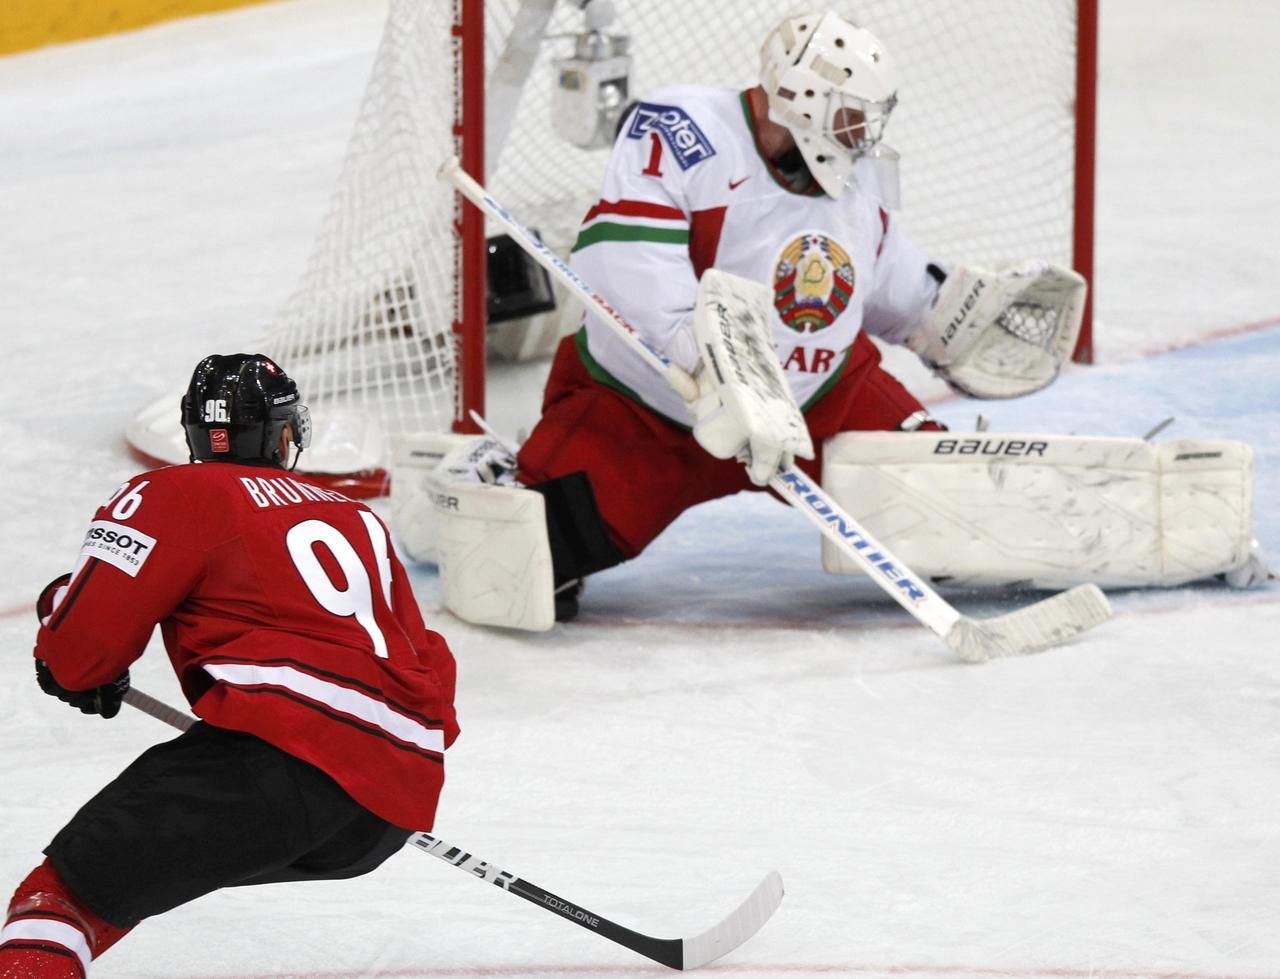 MS v hokeji 2012: Švýcarsko - Bělorusko (Brunner, Koval)